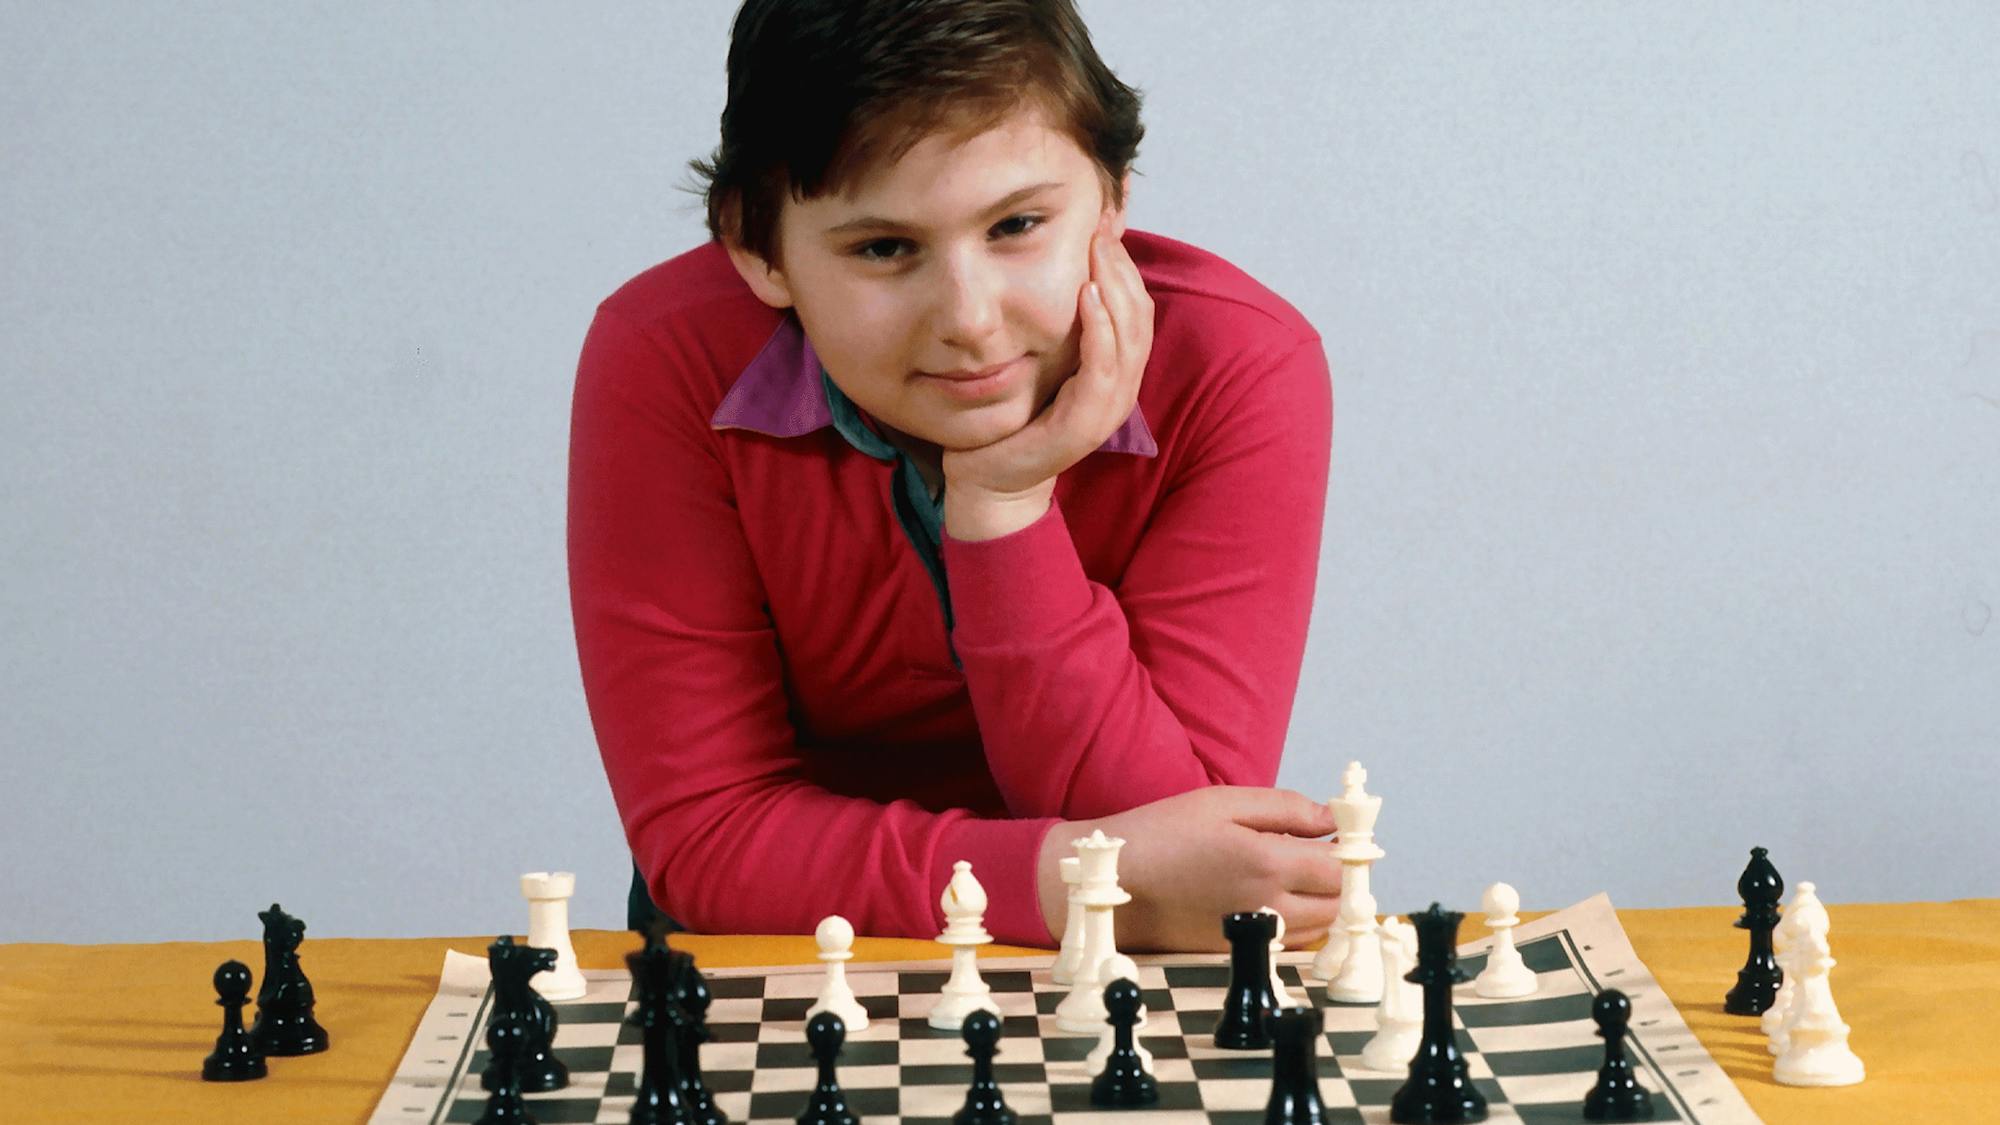 Judit Polgár, Hungarian chess grandmaster. She is generally